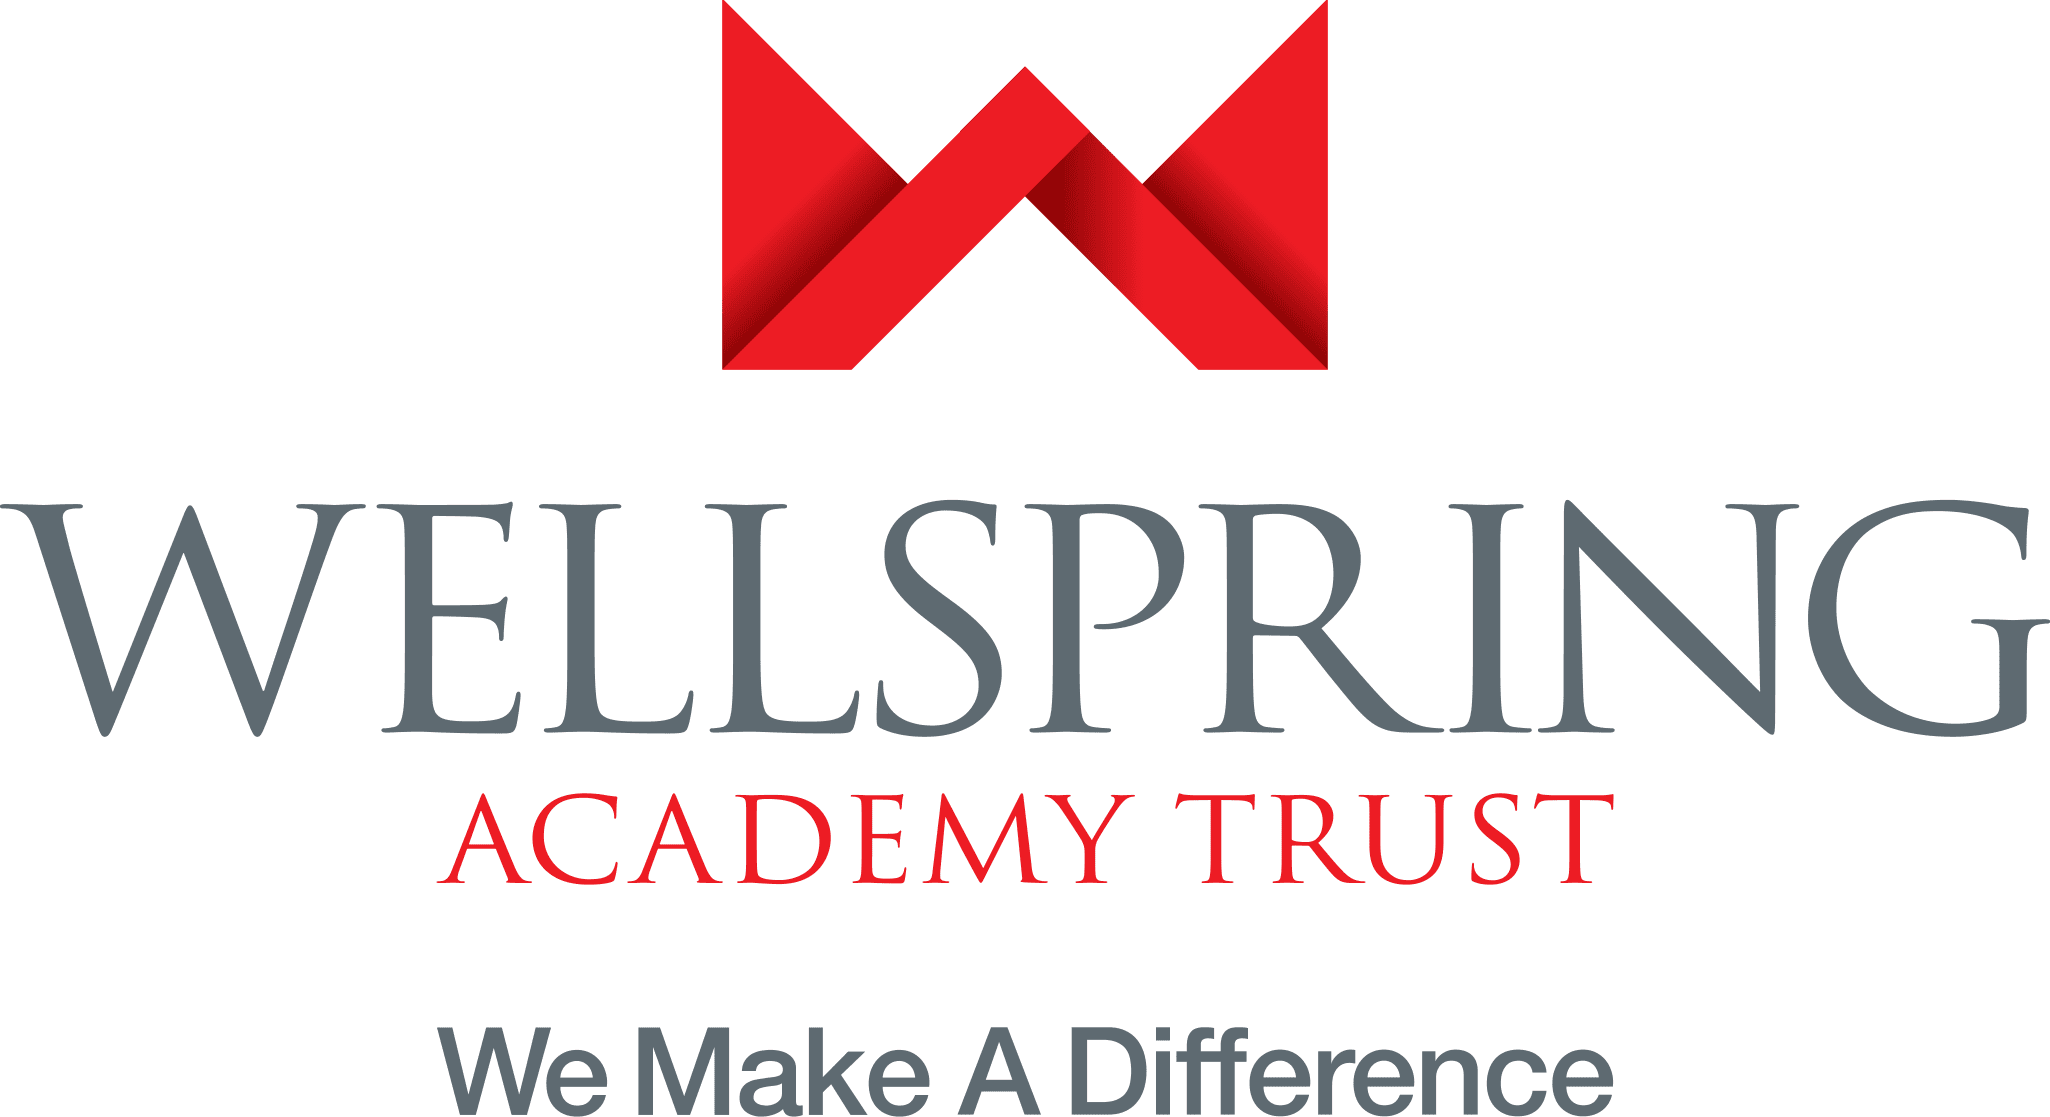 Wellspring-Strap-Logo-Translucent-Copy